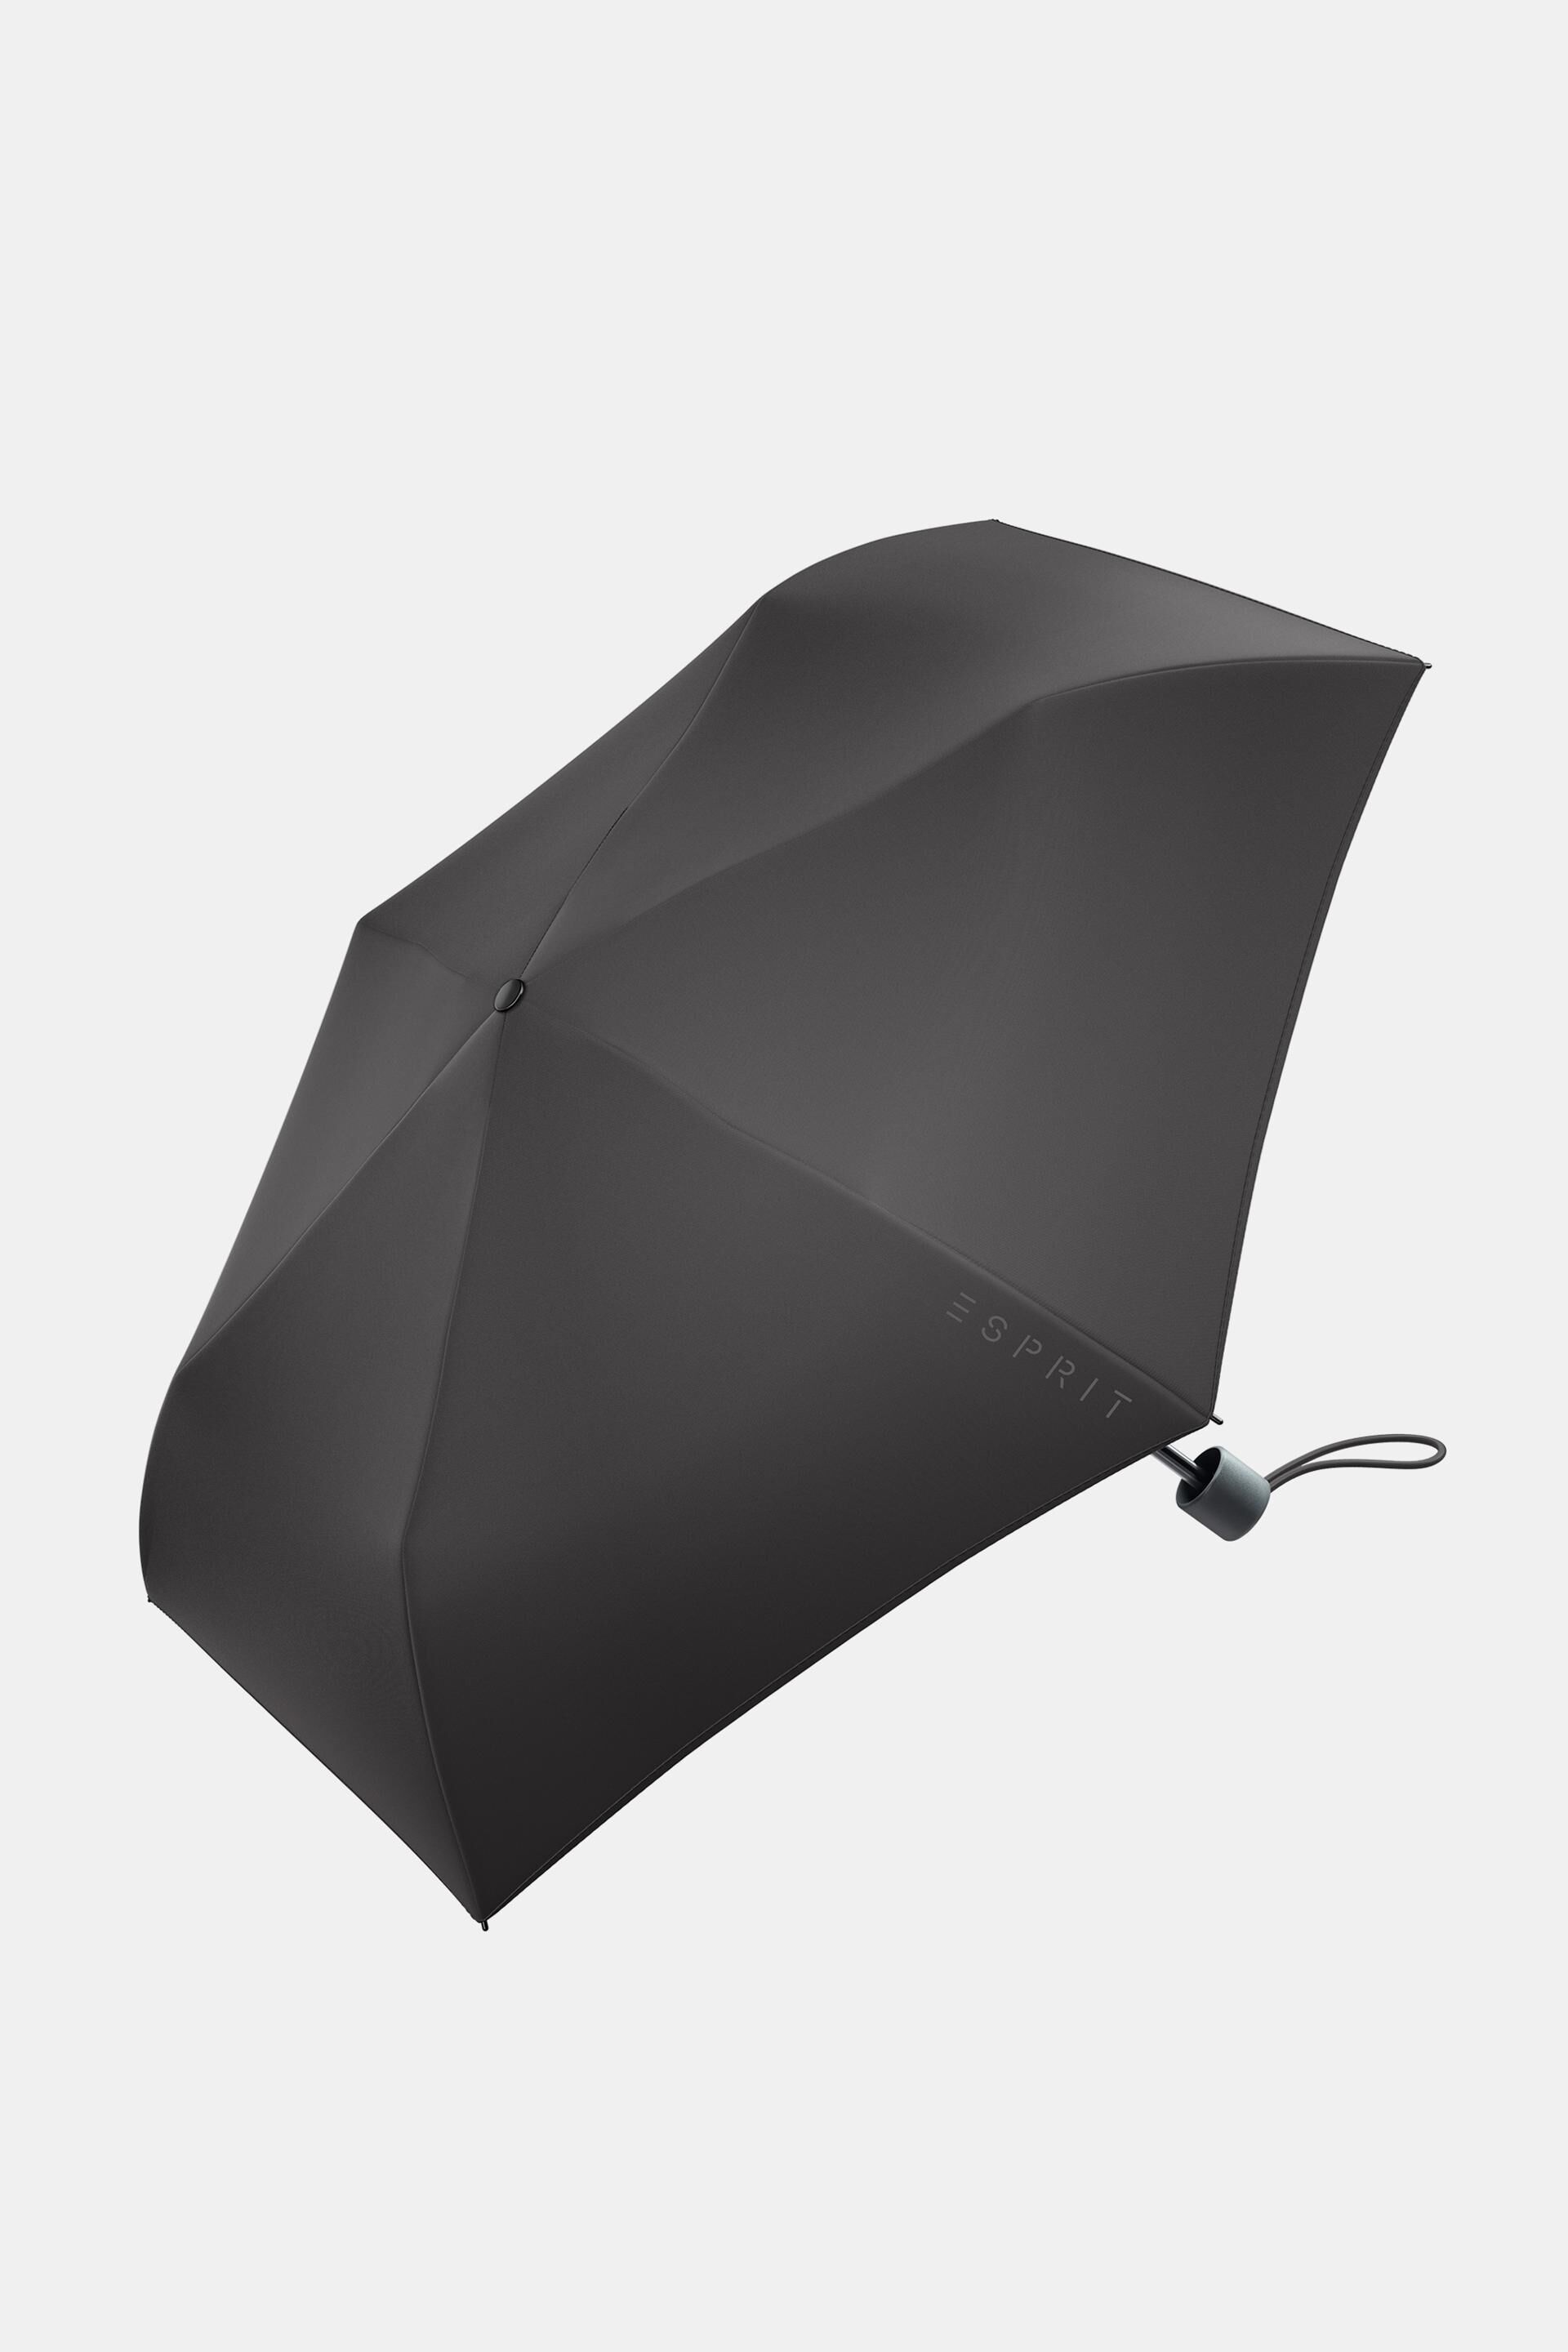 Esprit in logo Pocket black print umbrella with